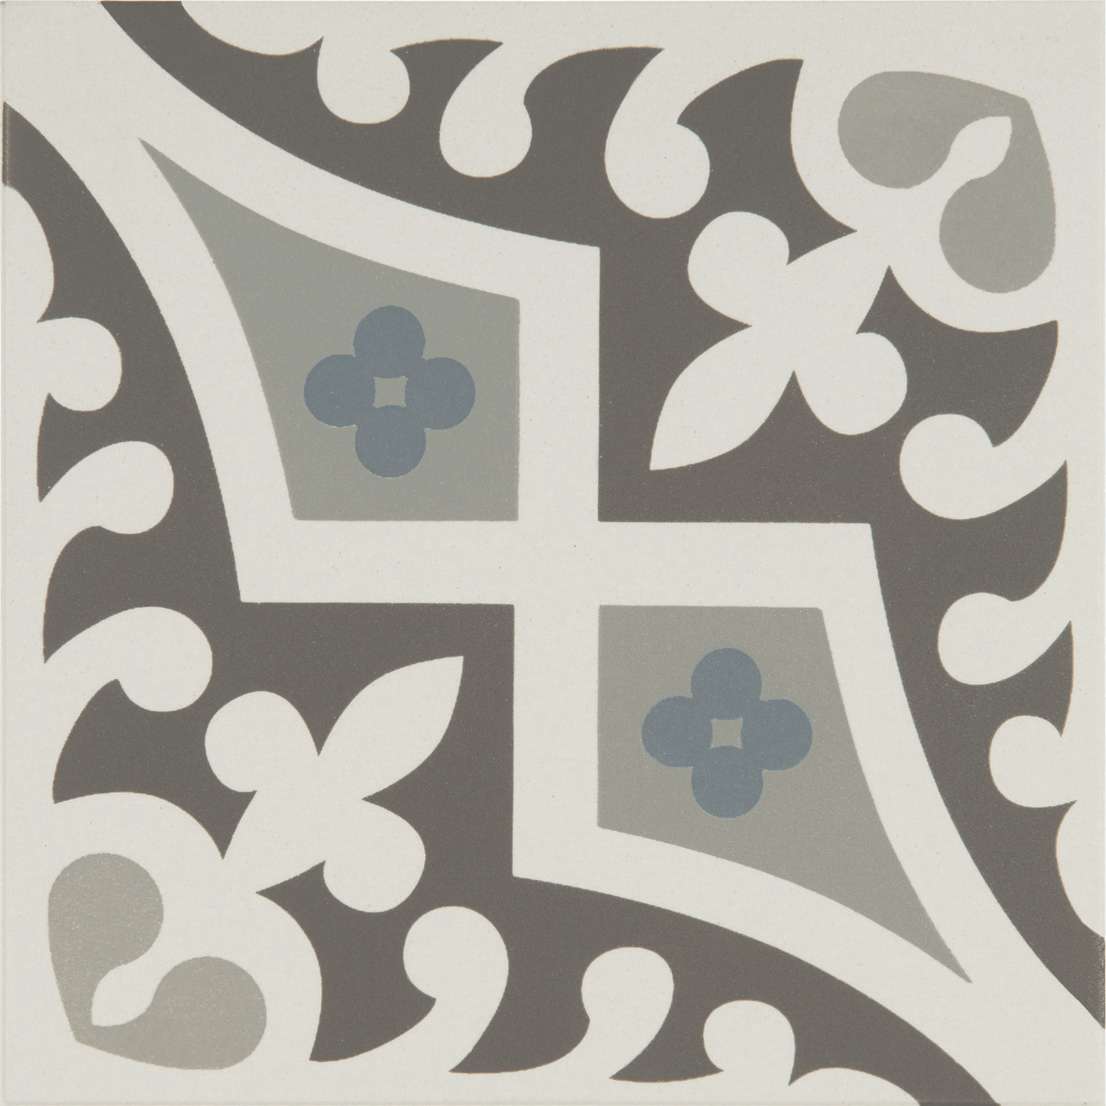 Original Style Odyssey Primo Romanesque Light Blue, Light Grey and Dark Grey on Dover White 15x15cm